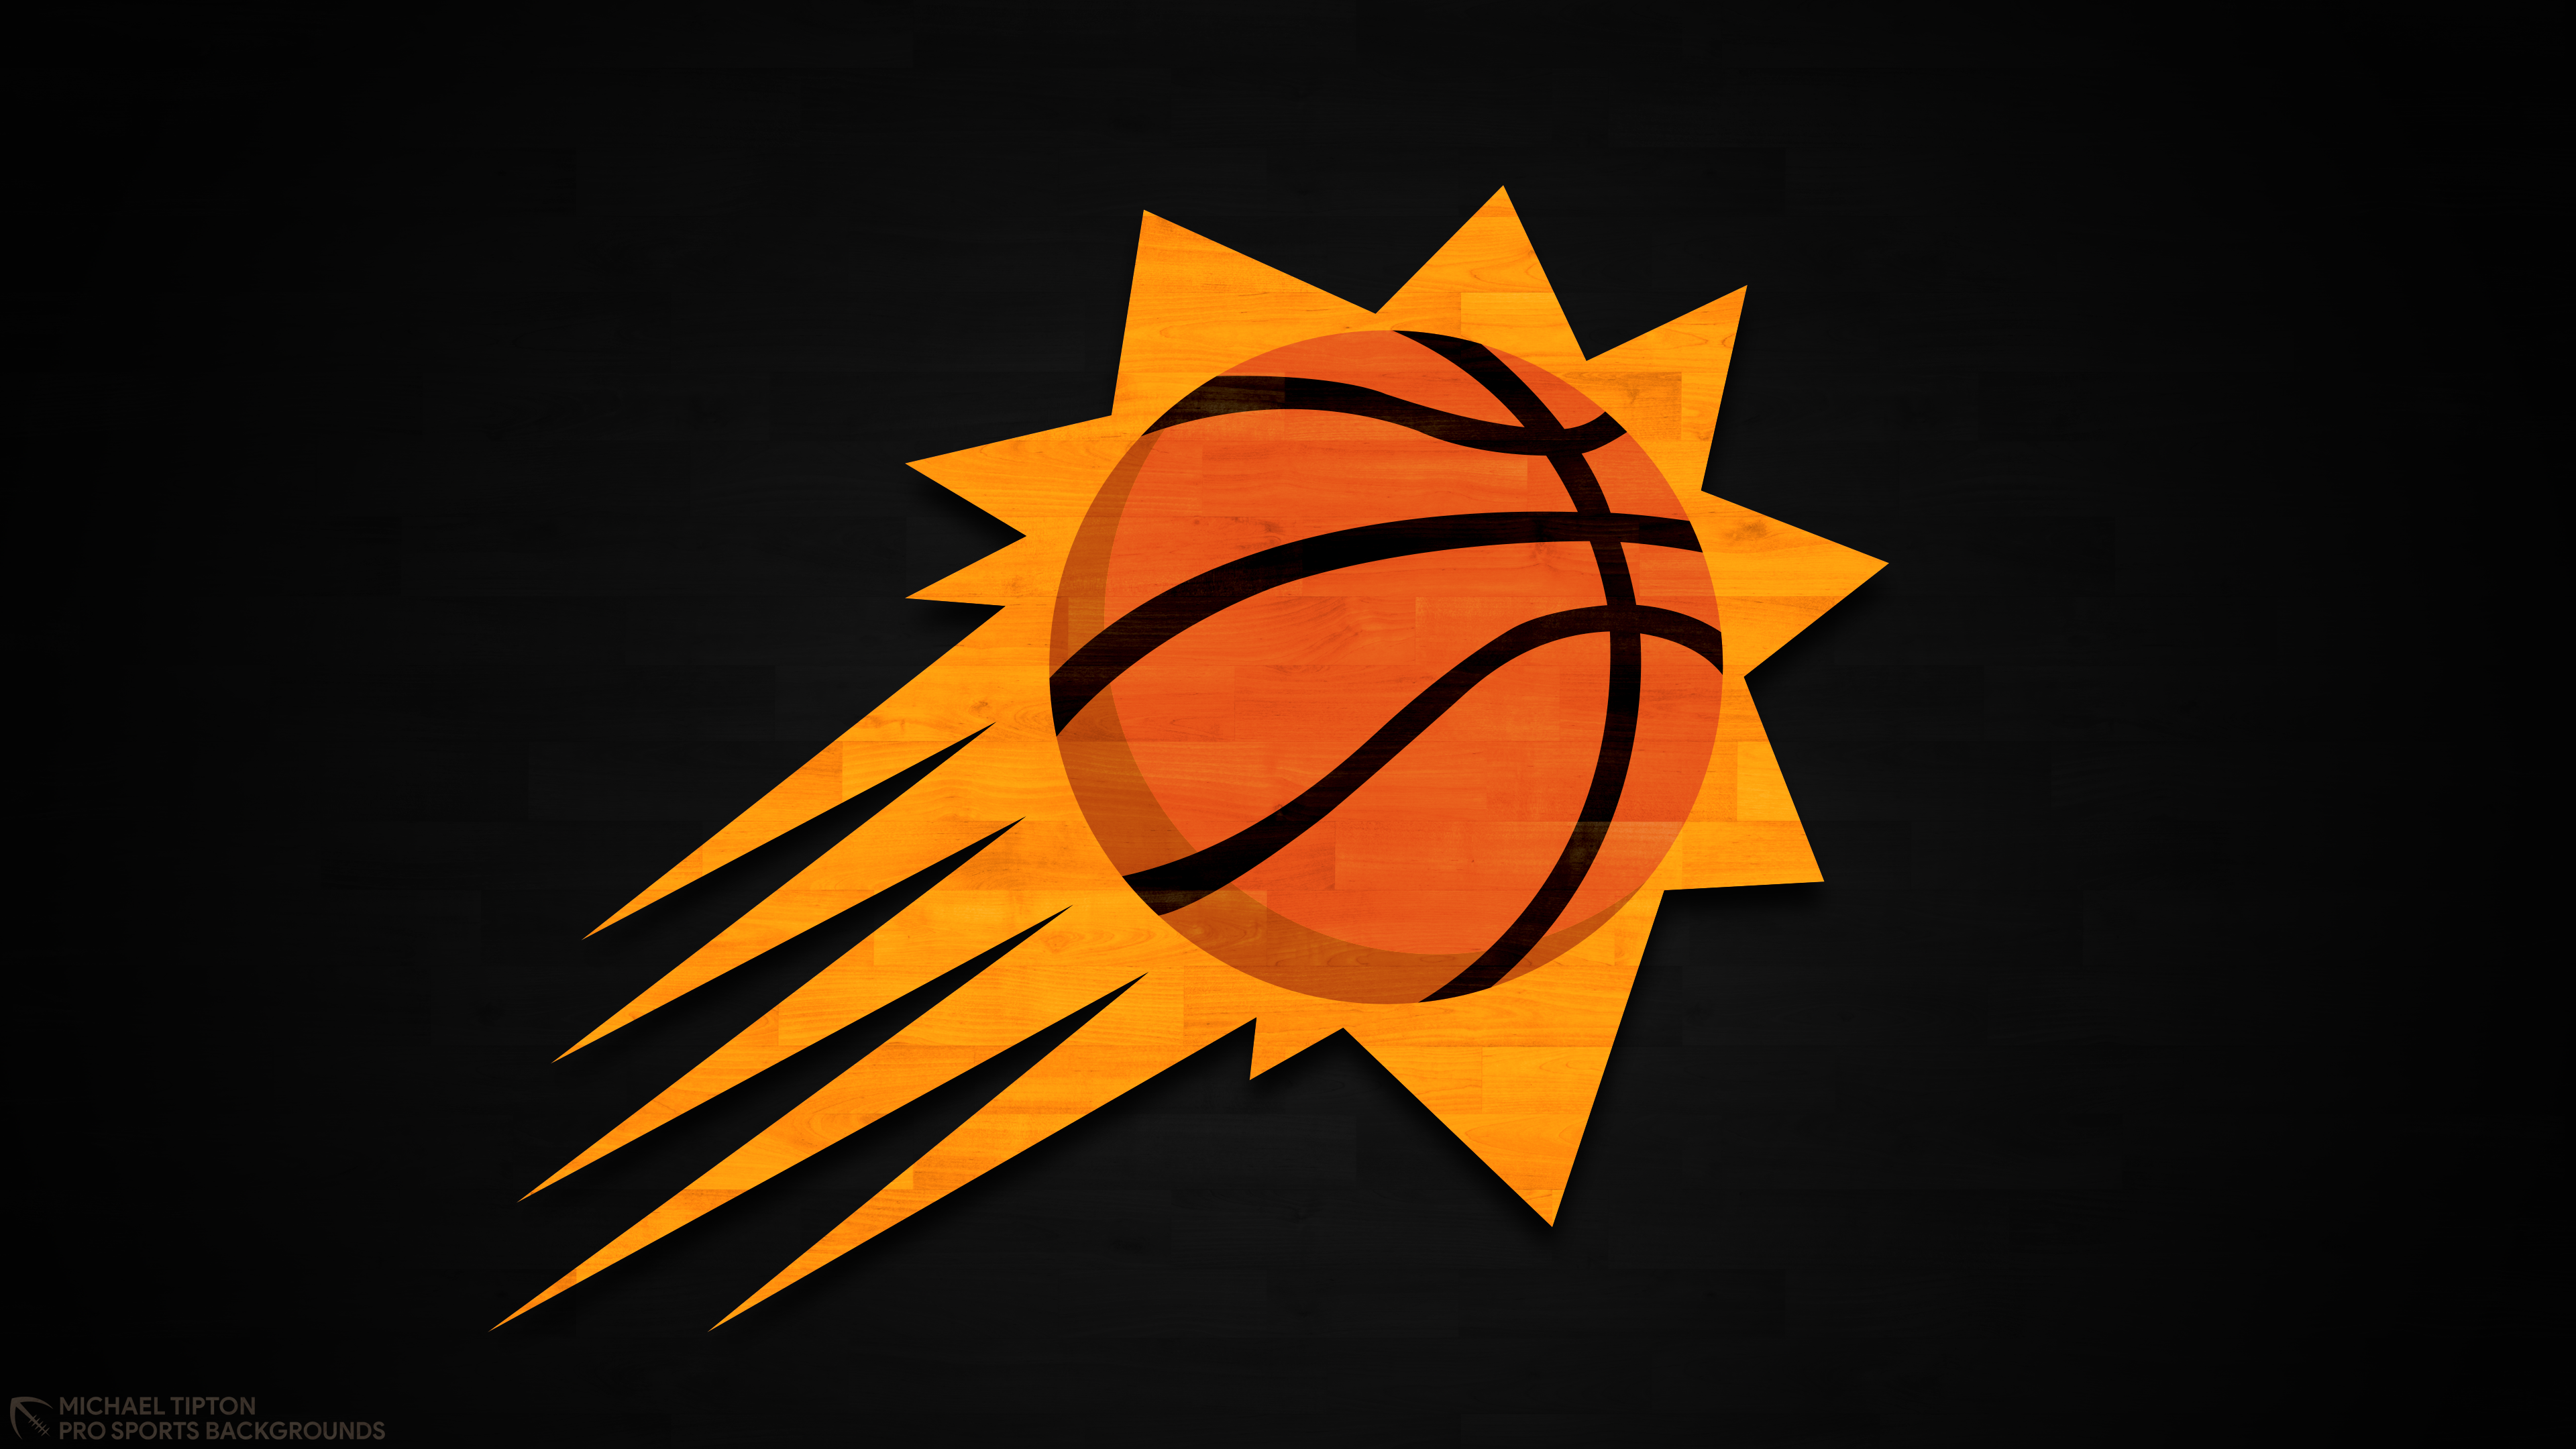 Sports Phoenix Suns HD Wallpaper | Background Image